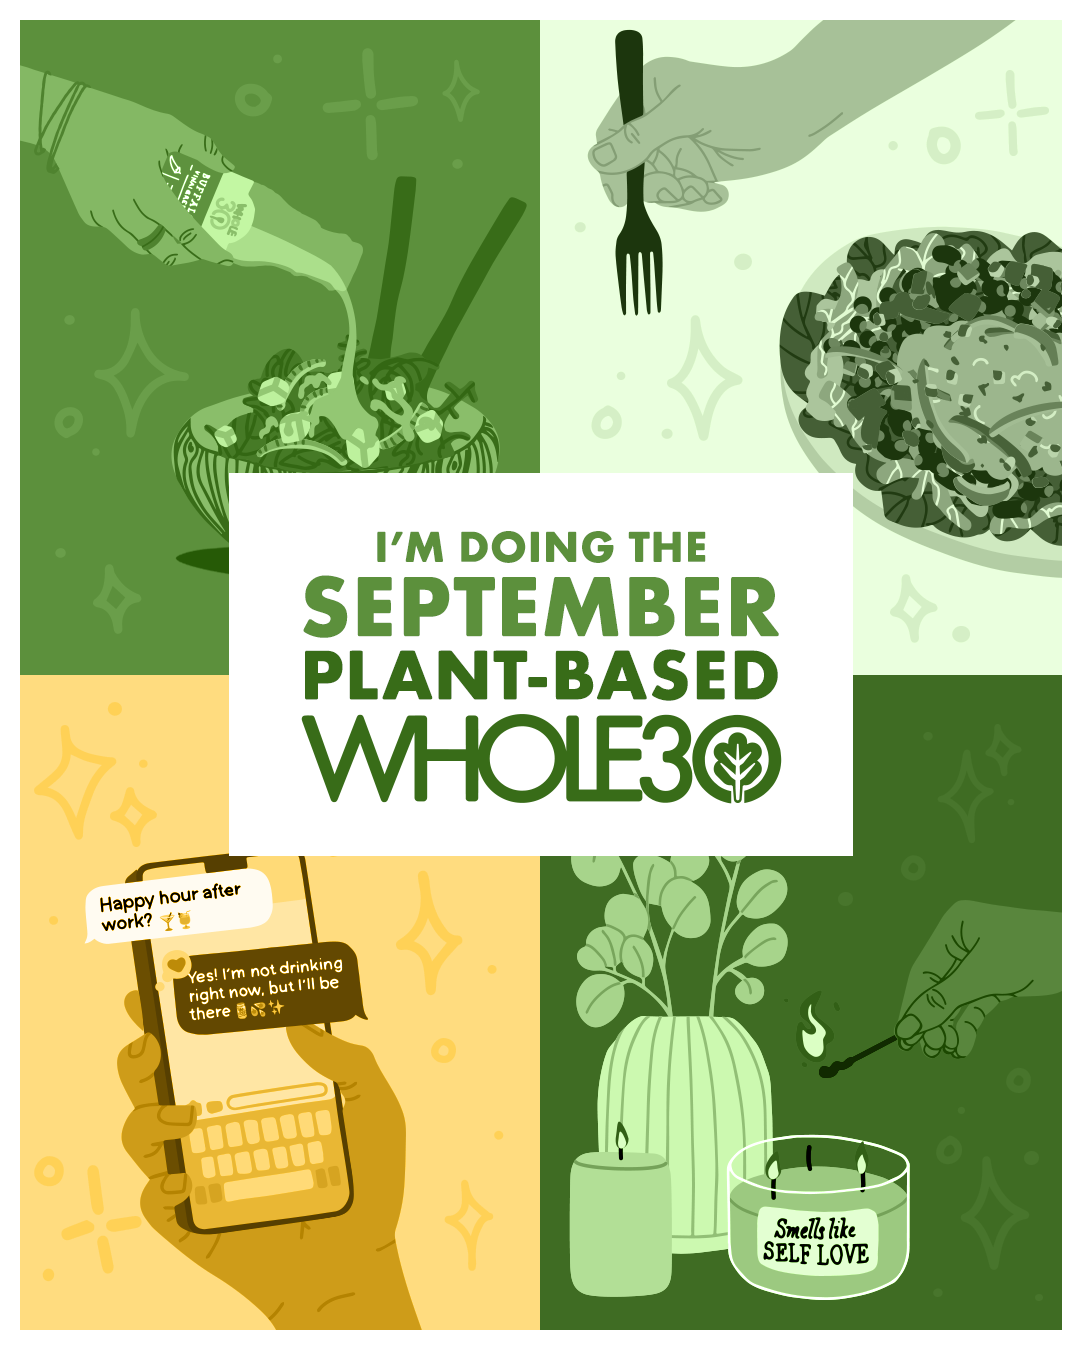 I'm doing the September Plant-Based Whole30.